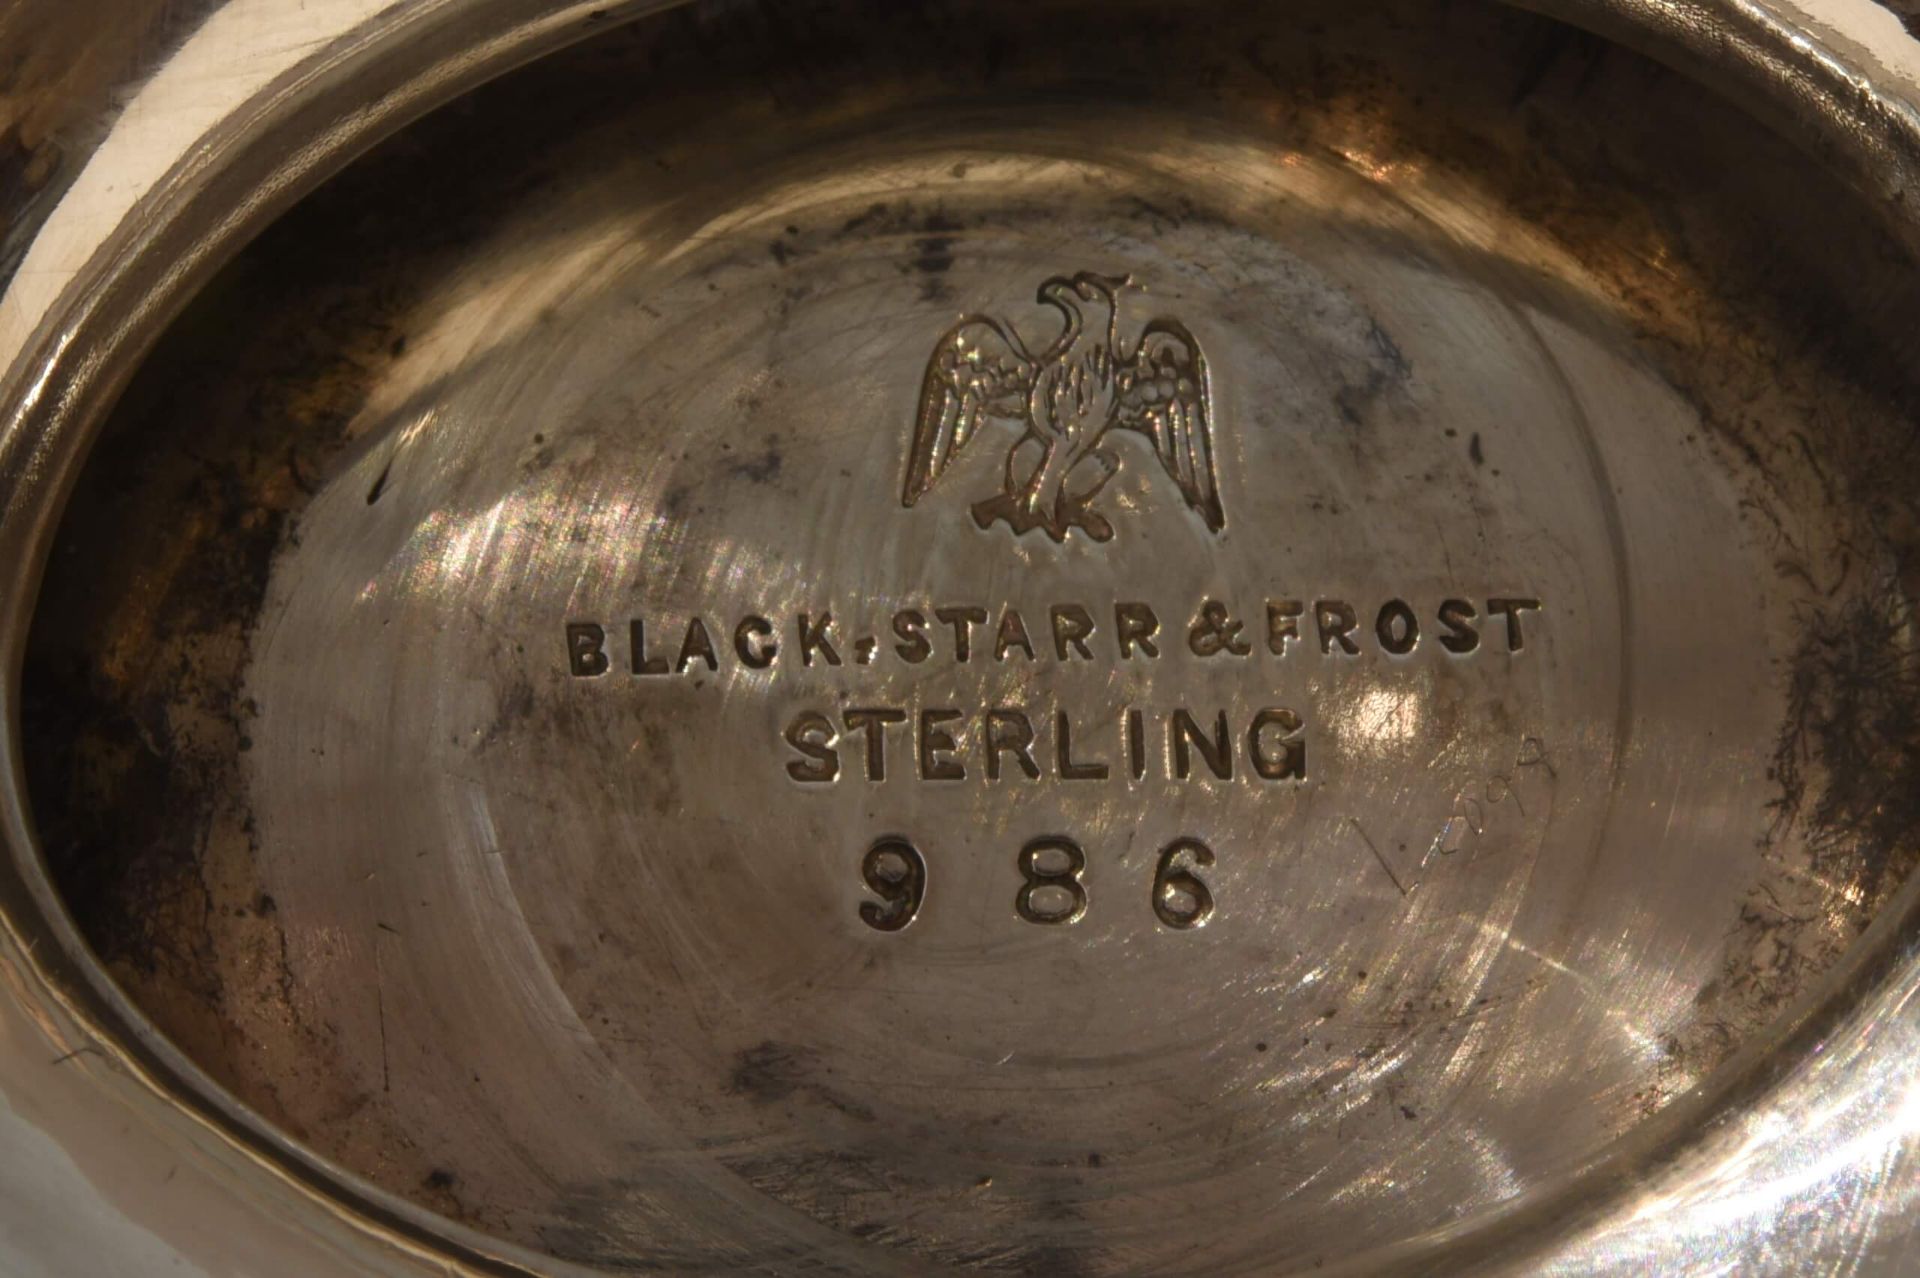 Antikes Teeservice Schwarz, Starr Frost, 925, USA, Ende des 19. Jahrhunderts | Antique Tea Set Black - Image 5 of 5